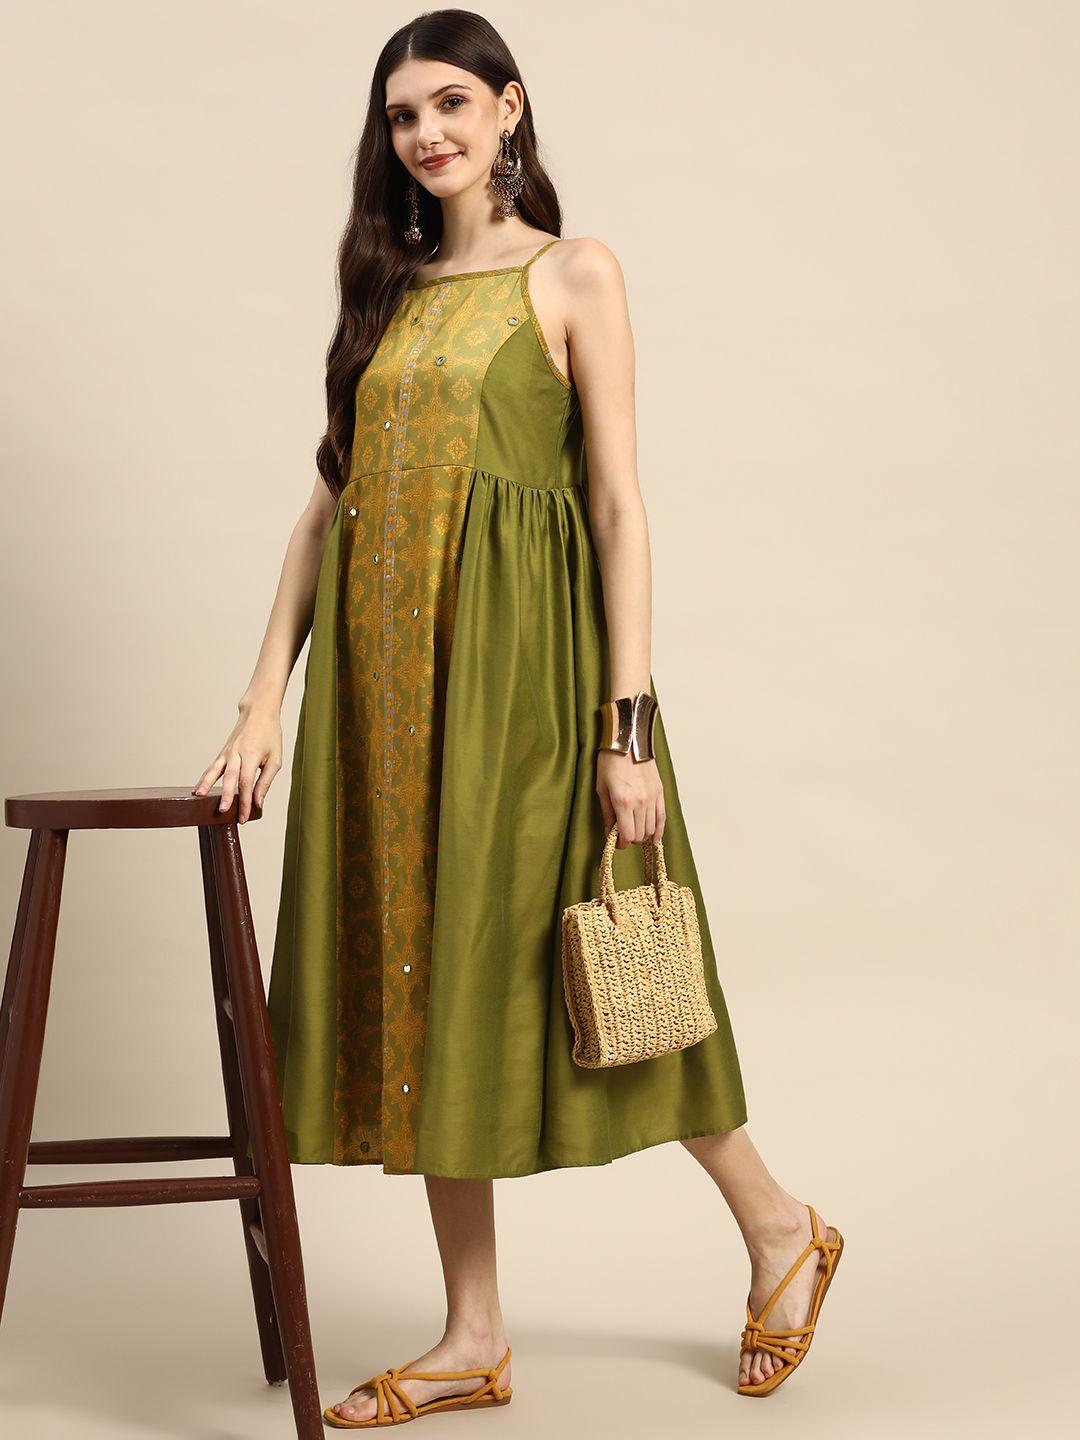 sangria olive green & yellow ethnic motifs midi dress